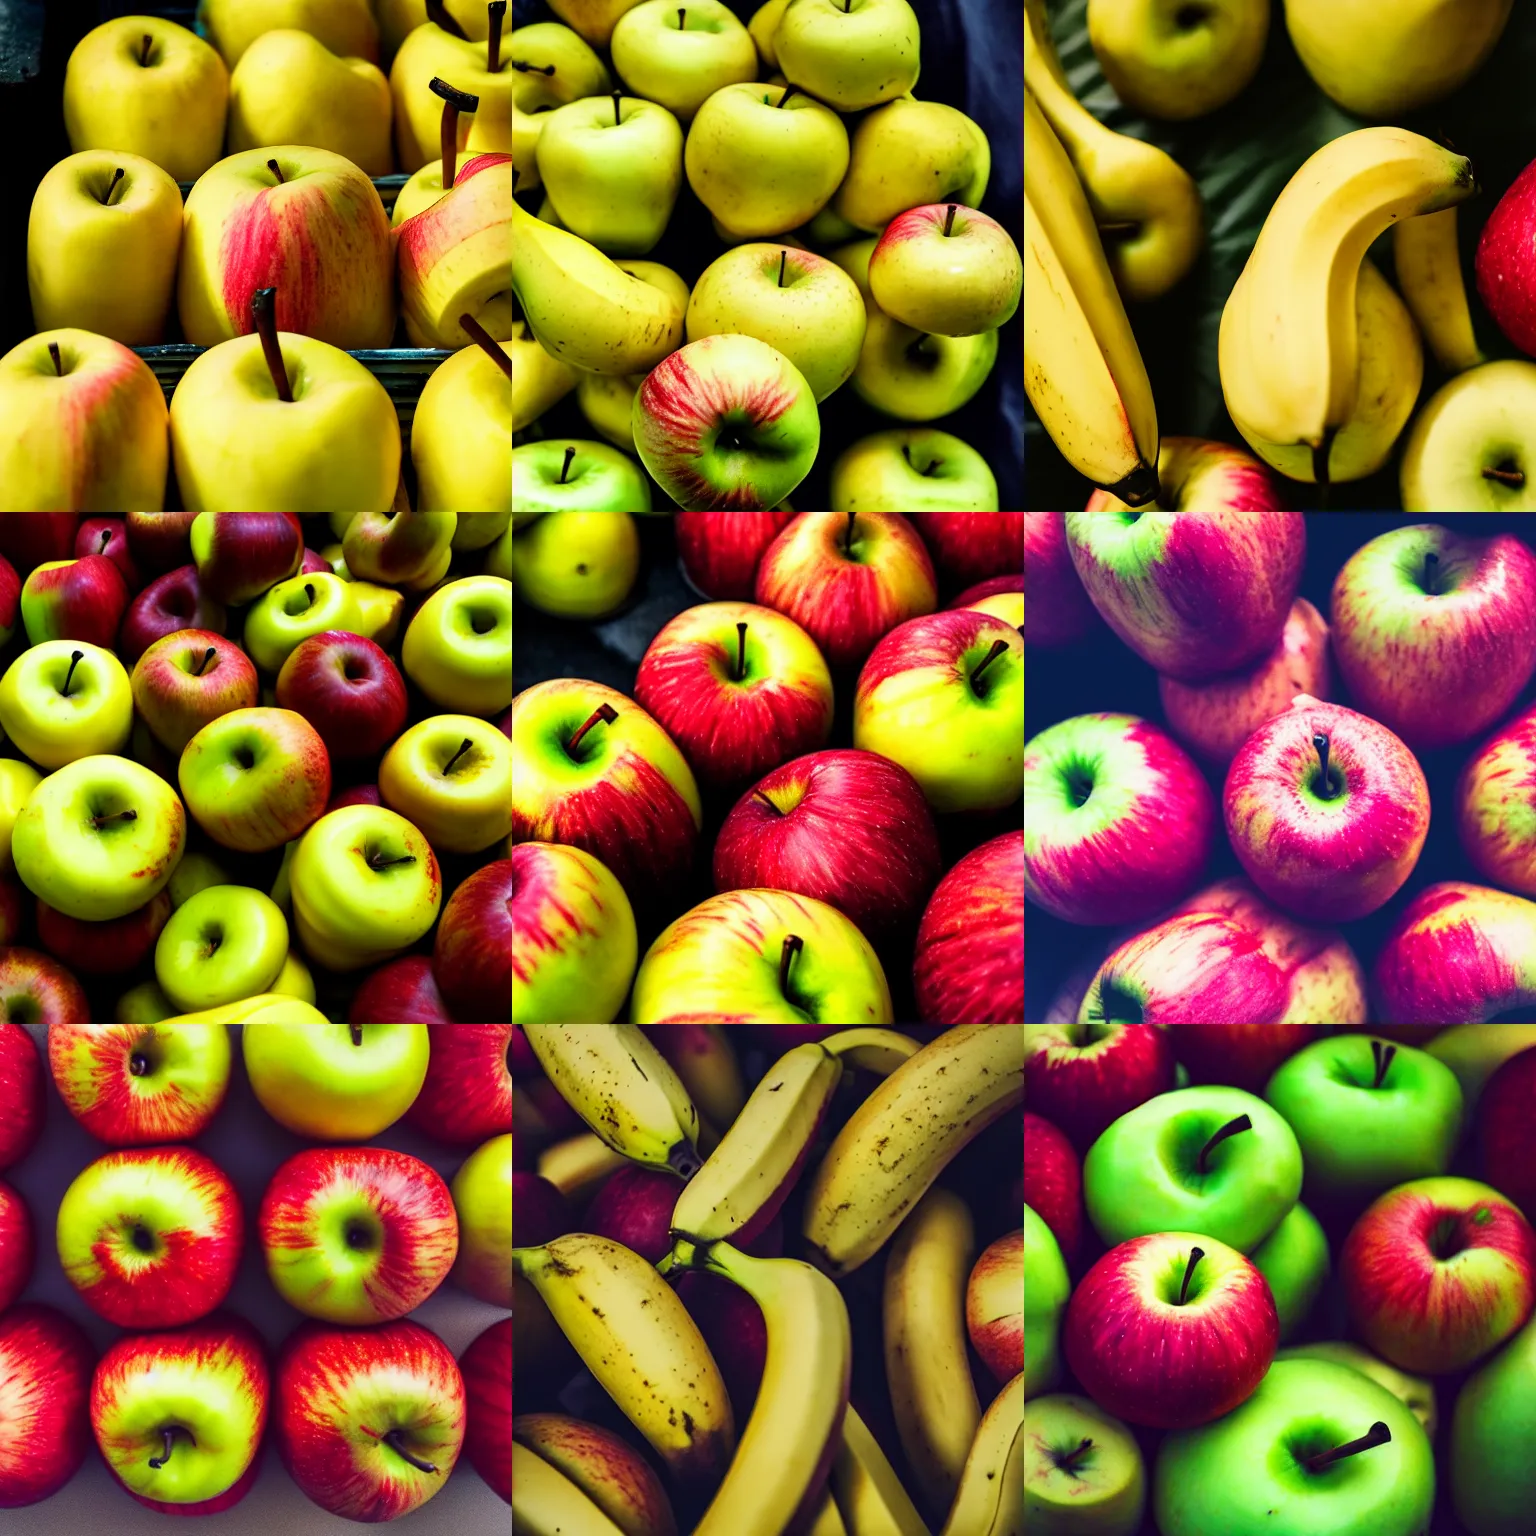 Prompt: banana shaped apples, close up shot, photography